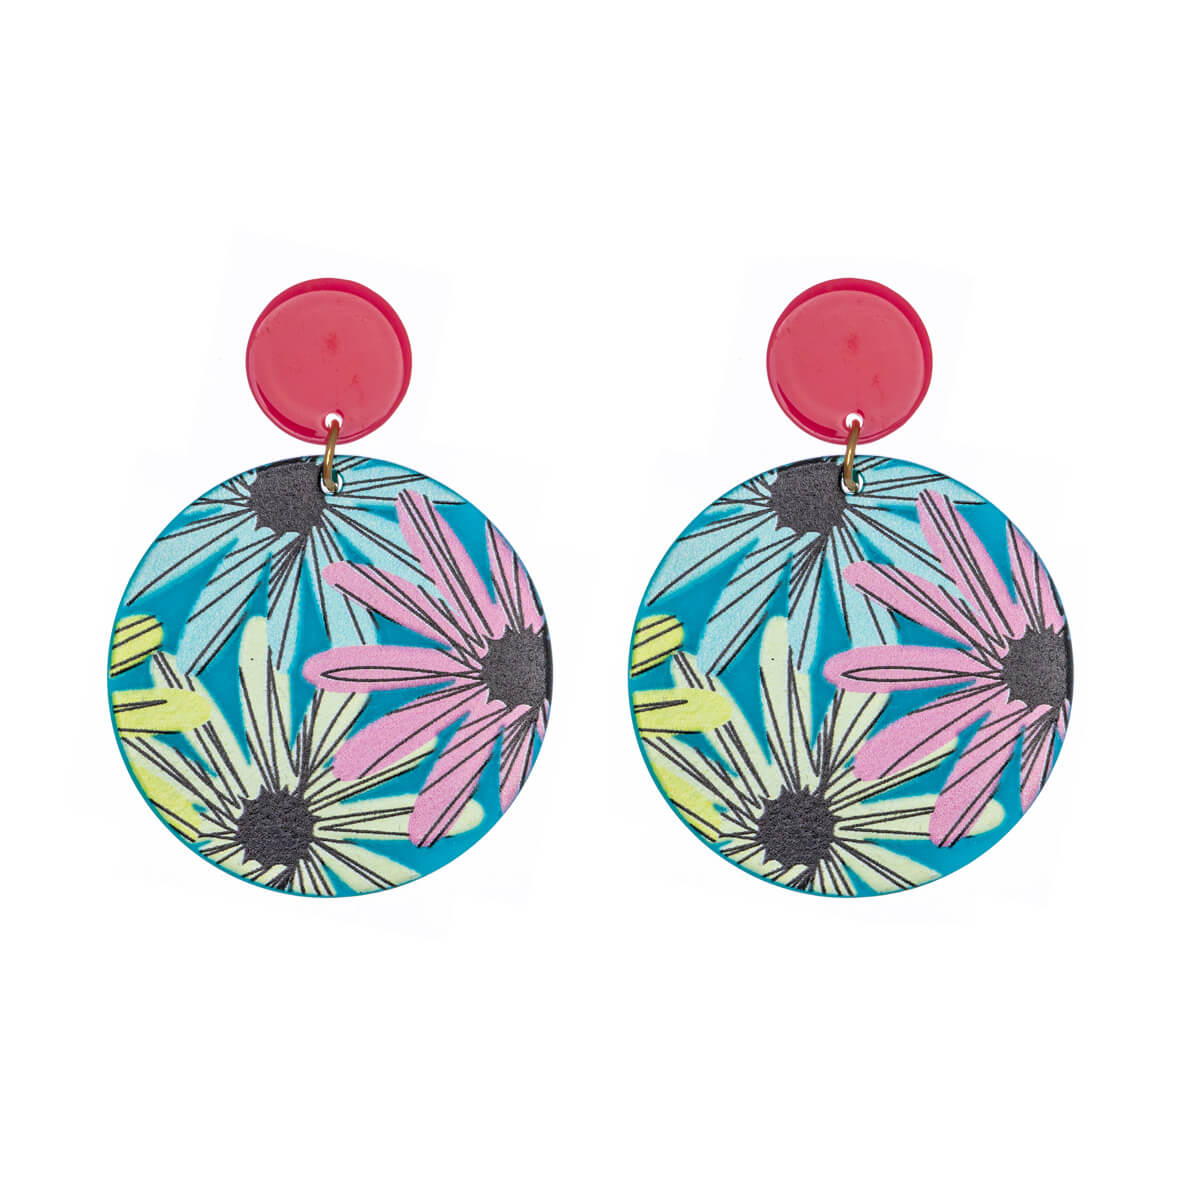 Round patterned earrings flowers